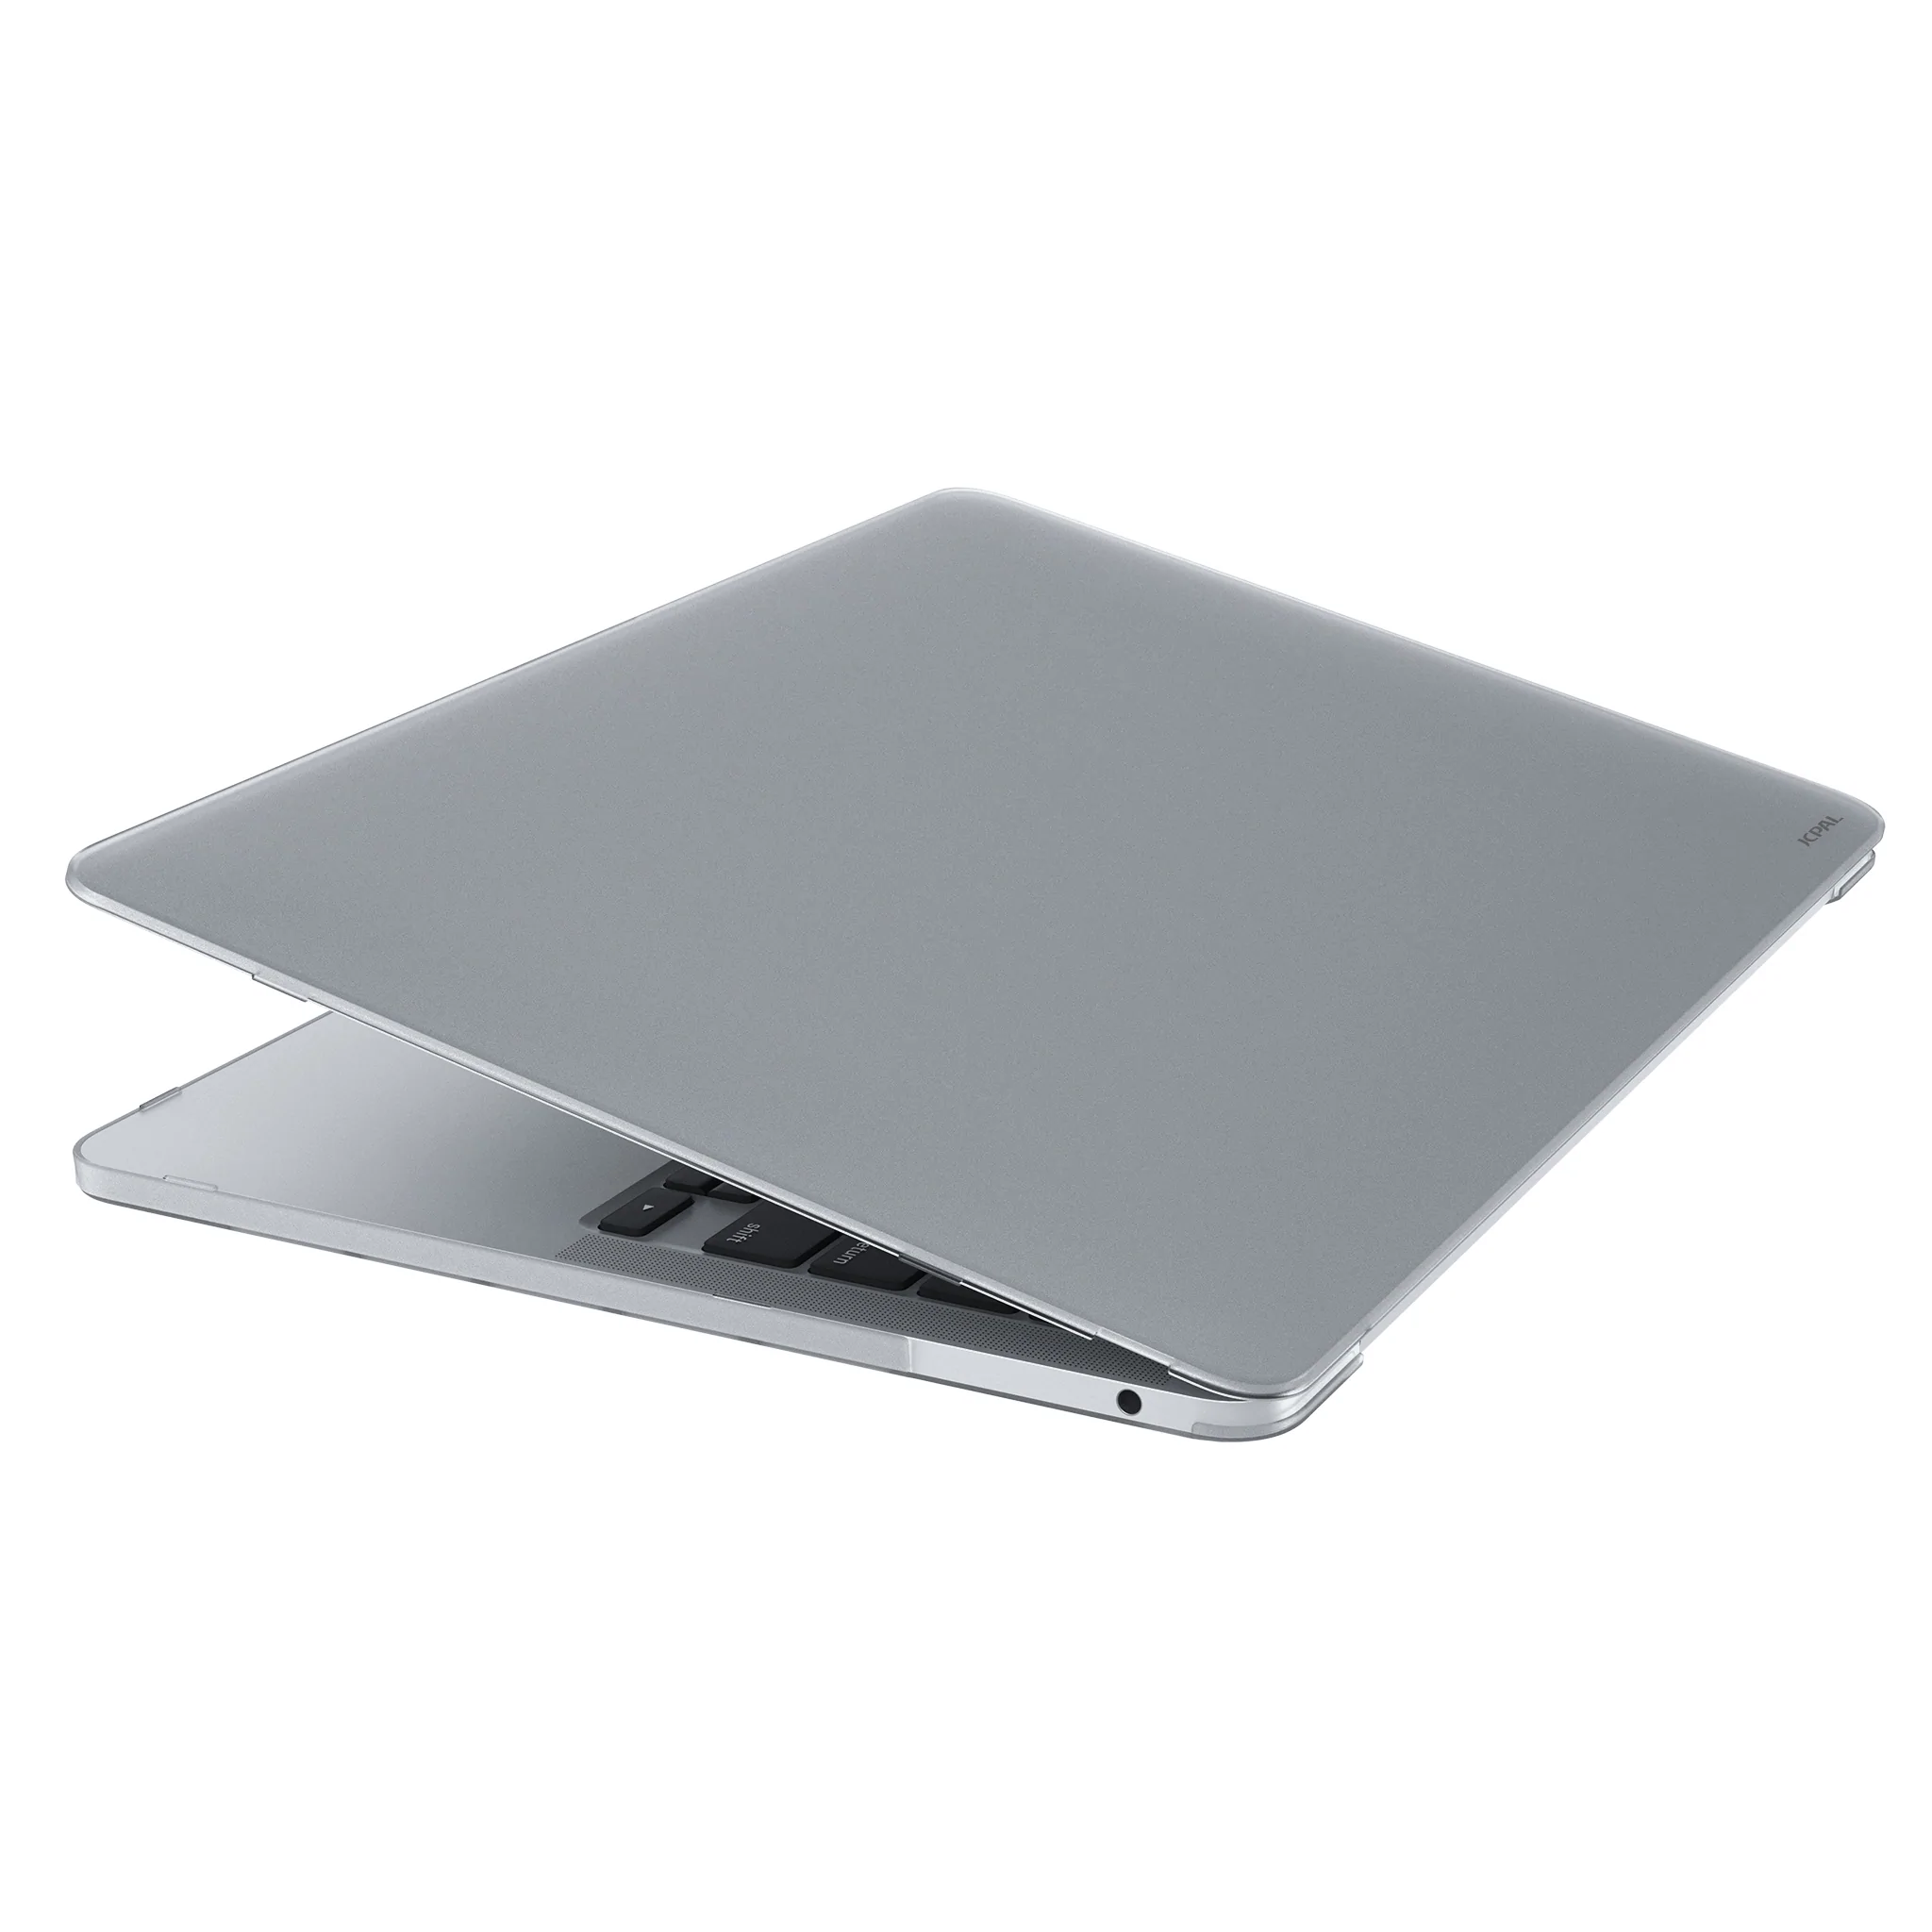  Ốp Lưng MacGuard Protective Case for MacBook Air 13